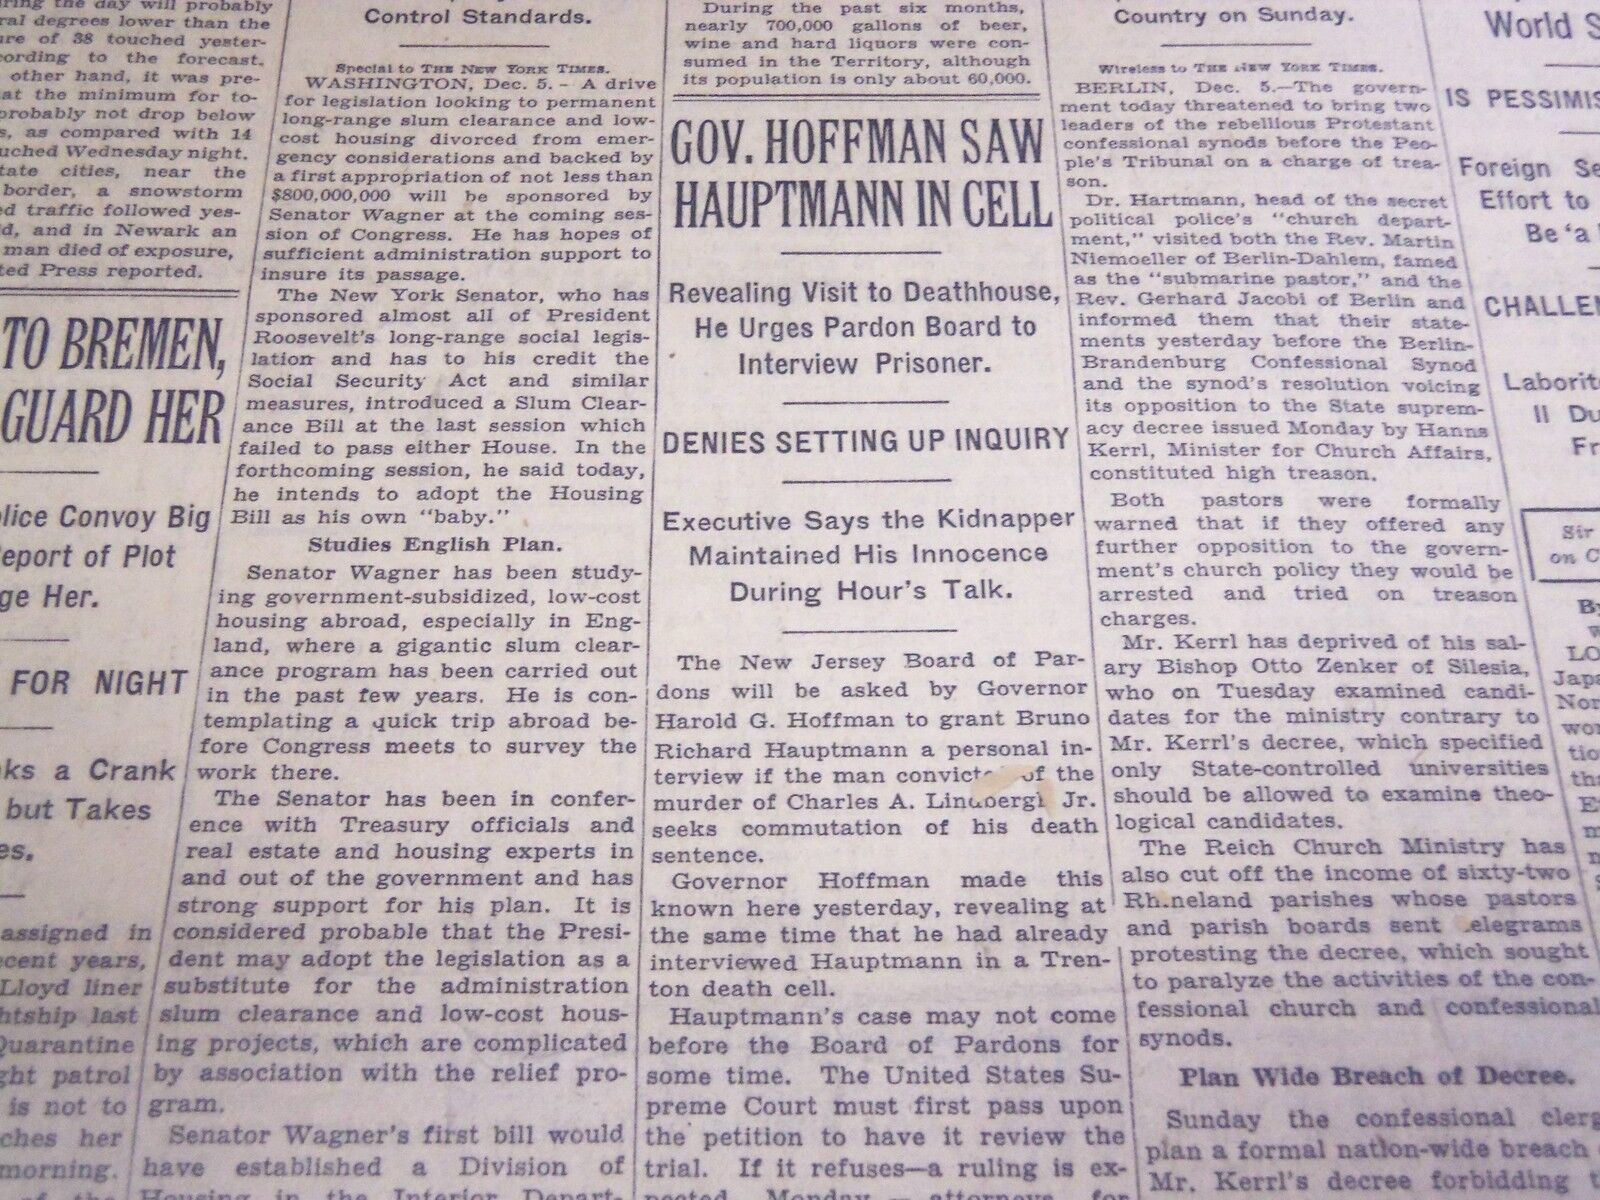 1935 DECEMBER 6 NEW YORK TIMES - GOV. HOFFMAN SAW HAUPTMANN IN CELL - NT 4850